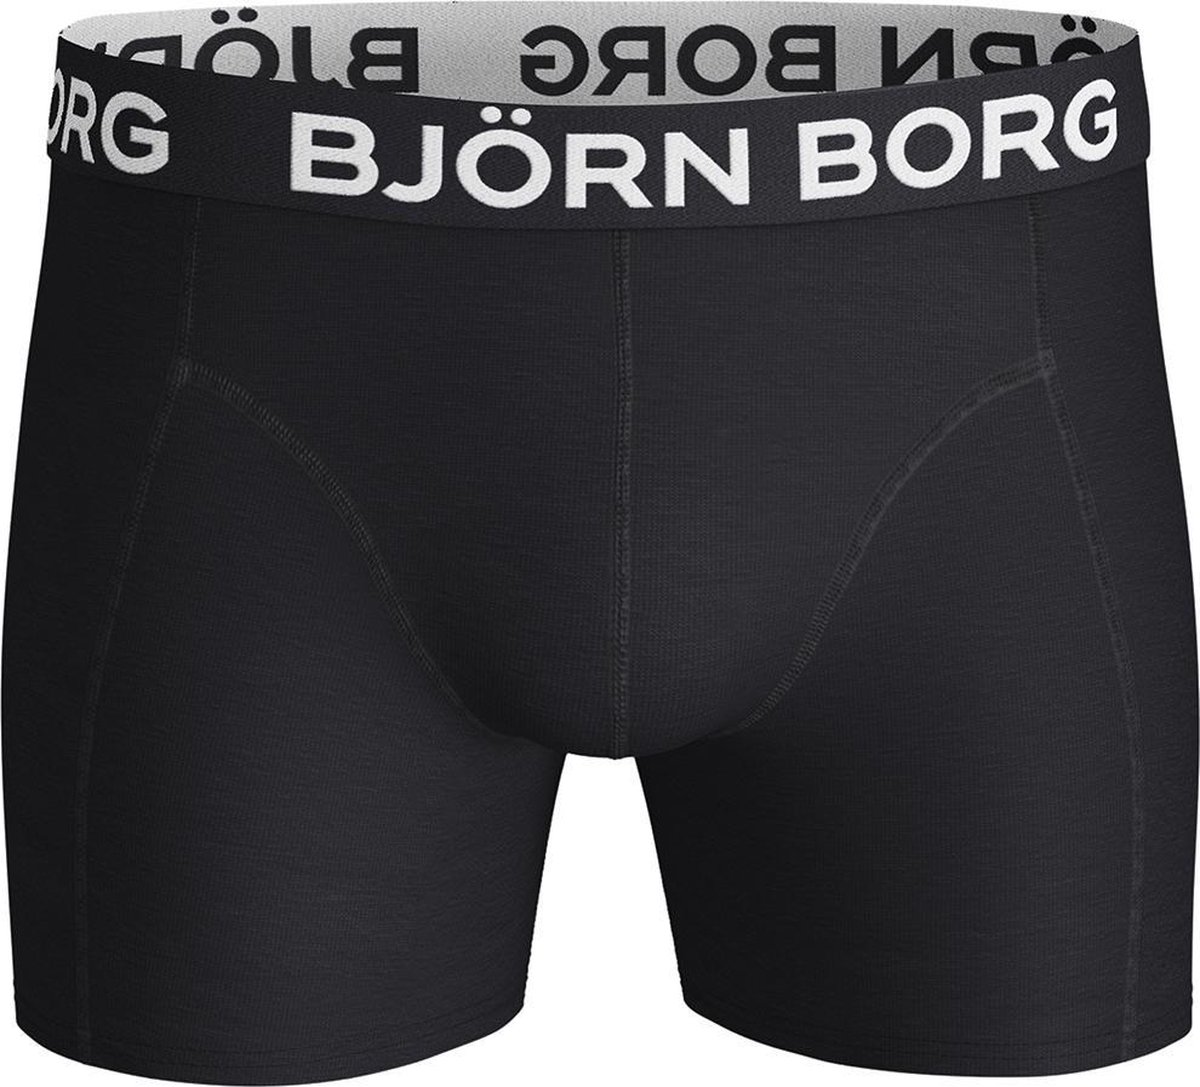 Björn Borg 3-pack boxershorts combed cotton - zwart/groen/wit | bol.com